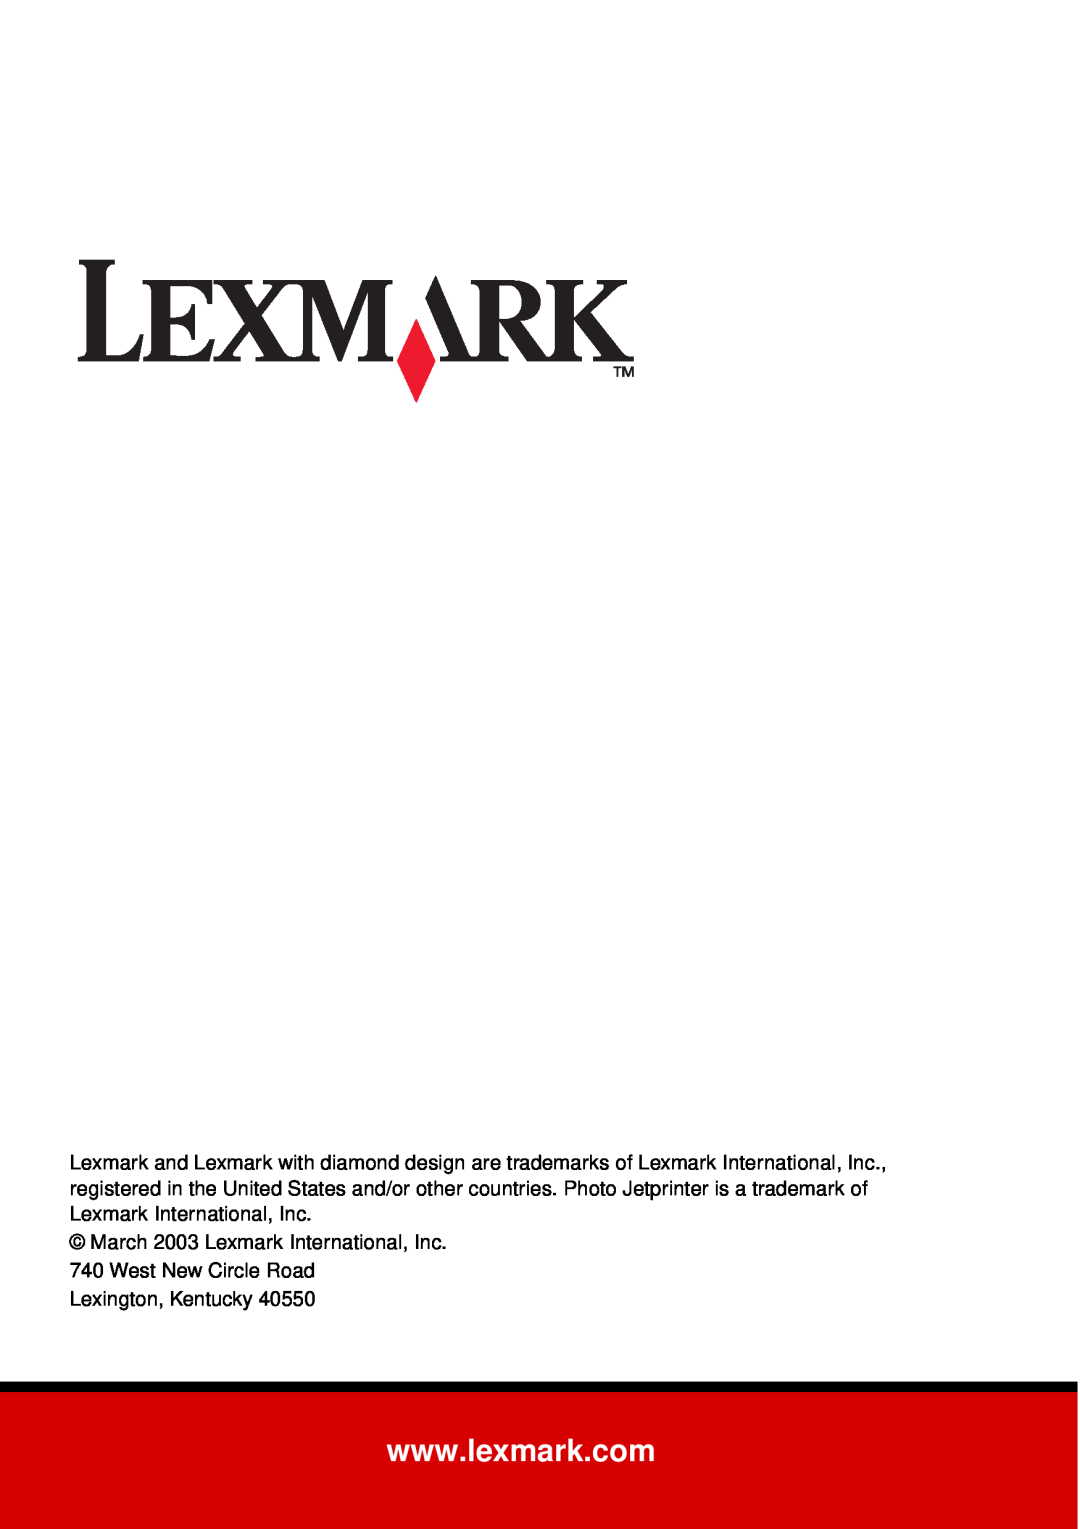 Lexmark P700 manual March 2003 Lexmark International, Inc 740 West New Circle Road, Lexington, Kentucky 